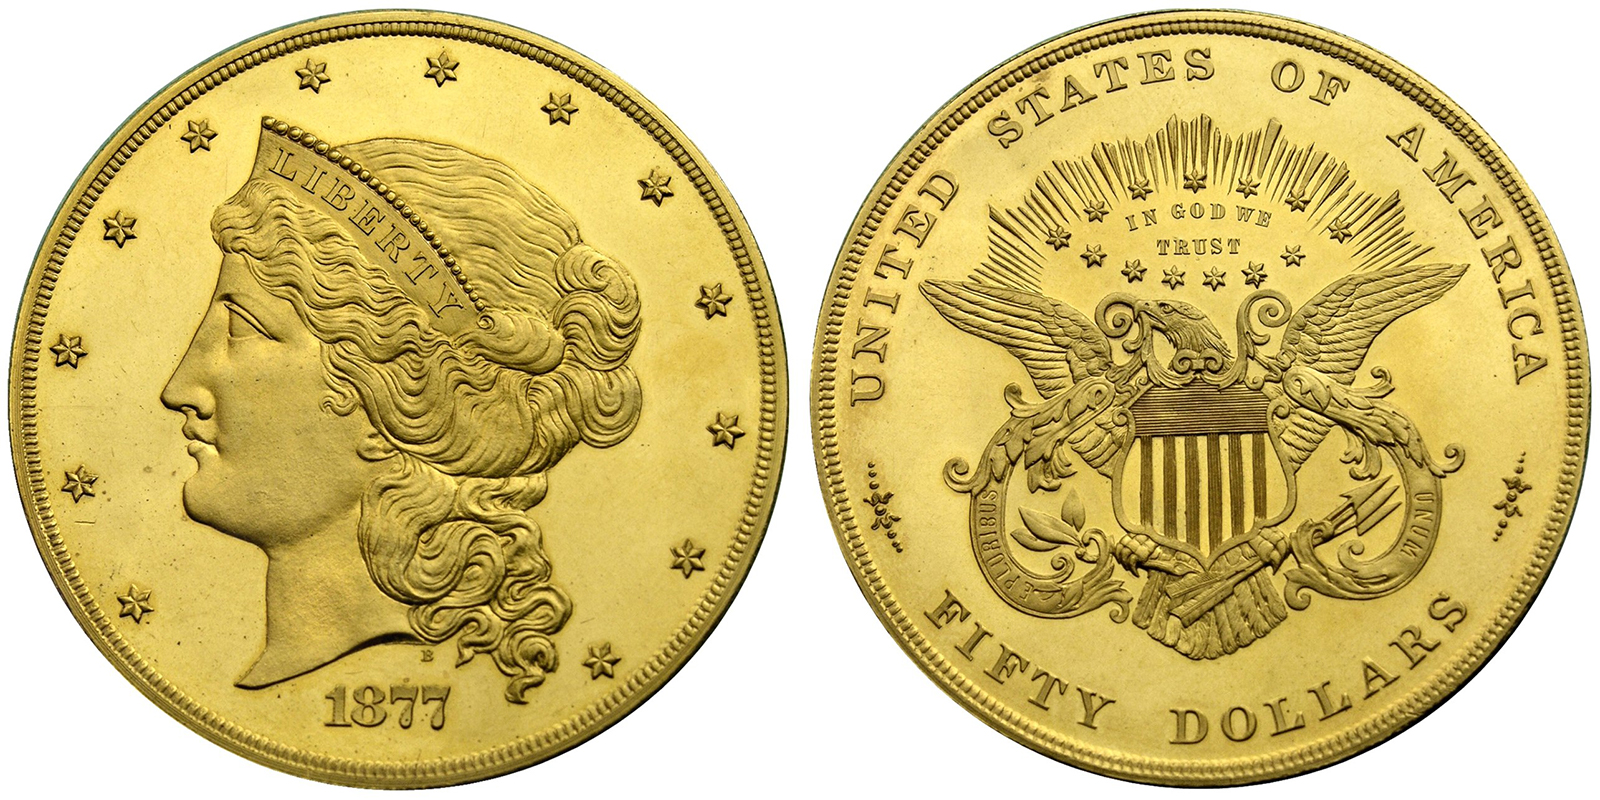 half union 50-dollar gold coin